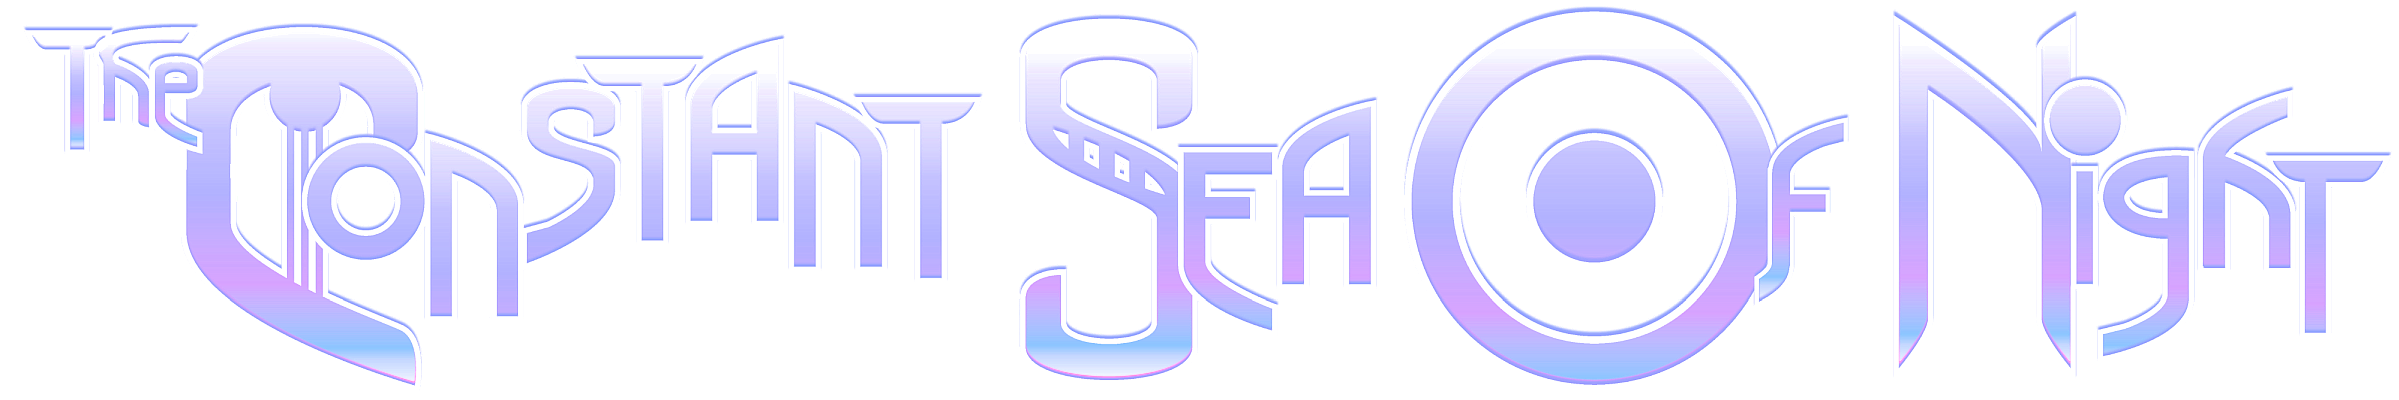 The Constant Sea of Night logo